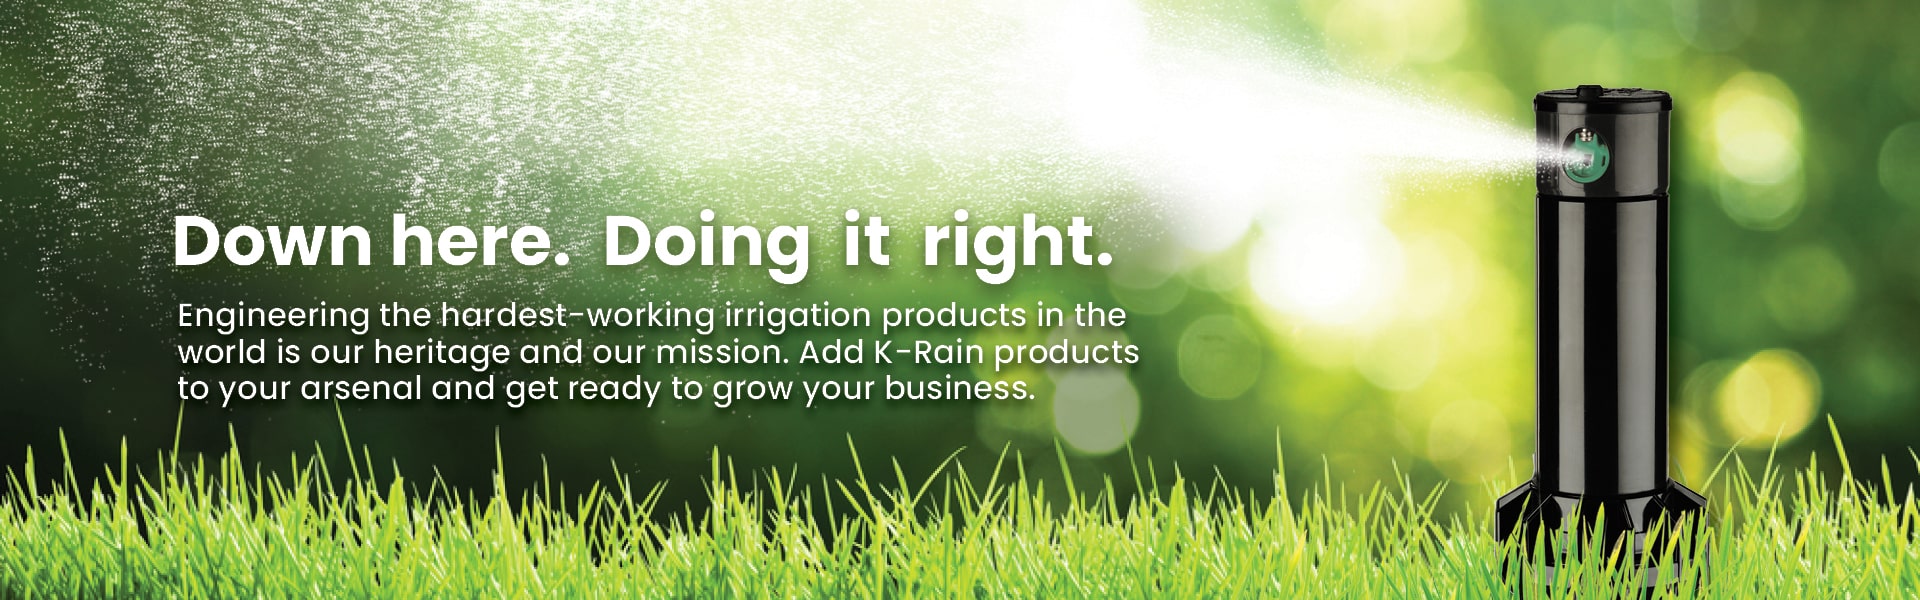 K-Rain Irrigation Products